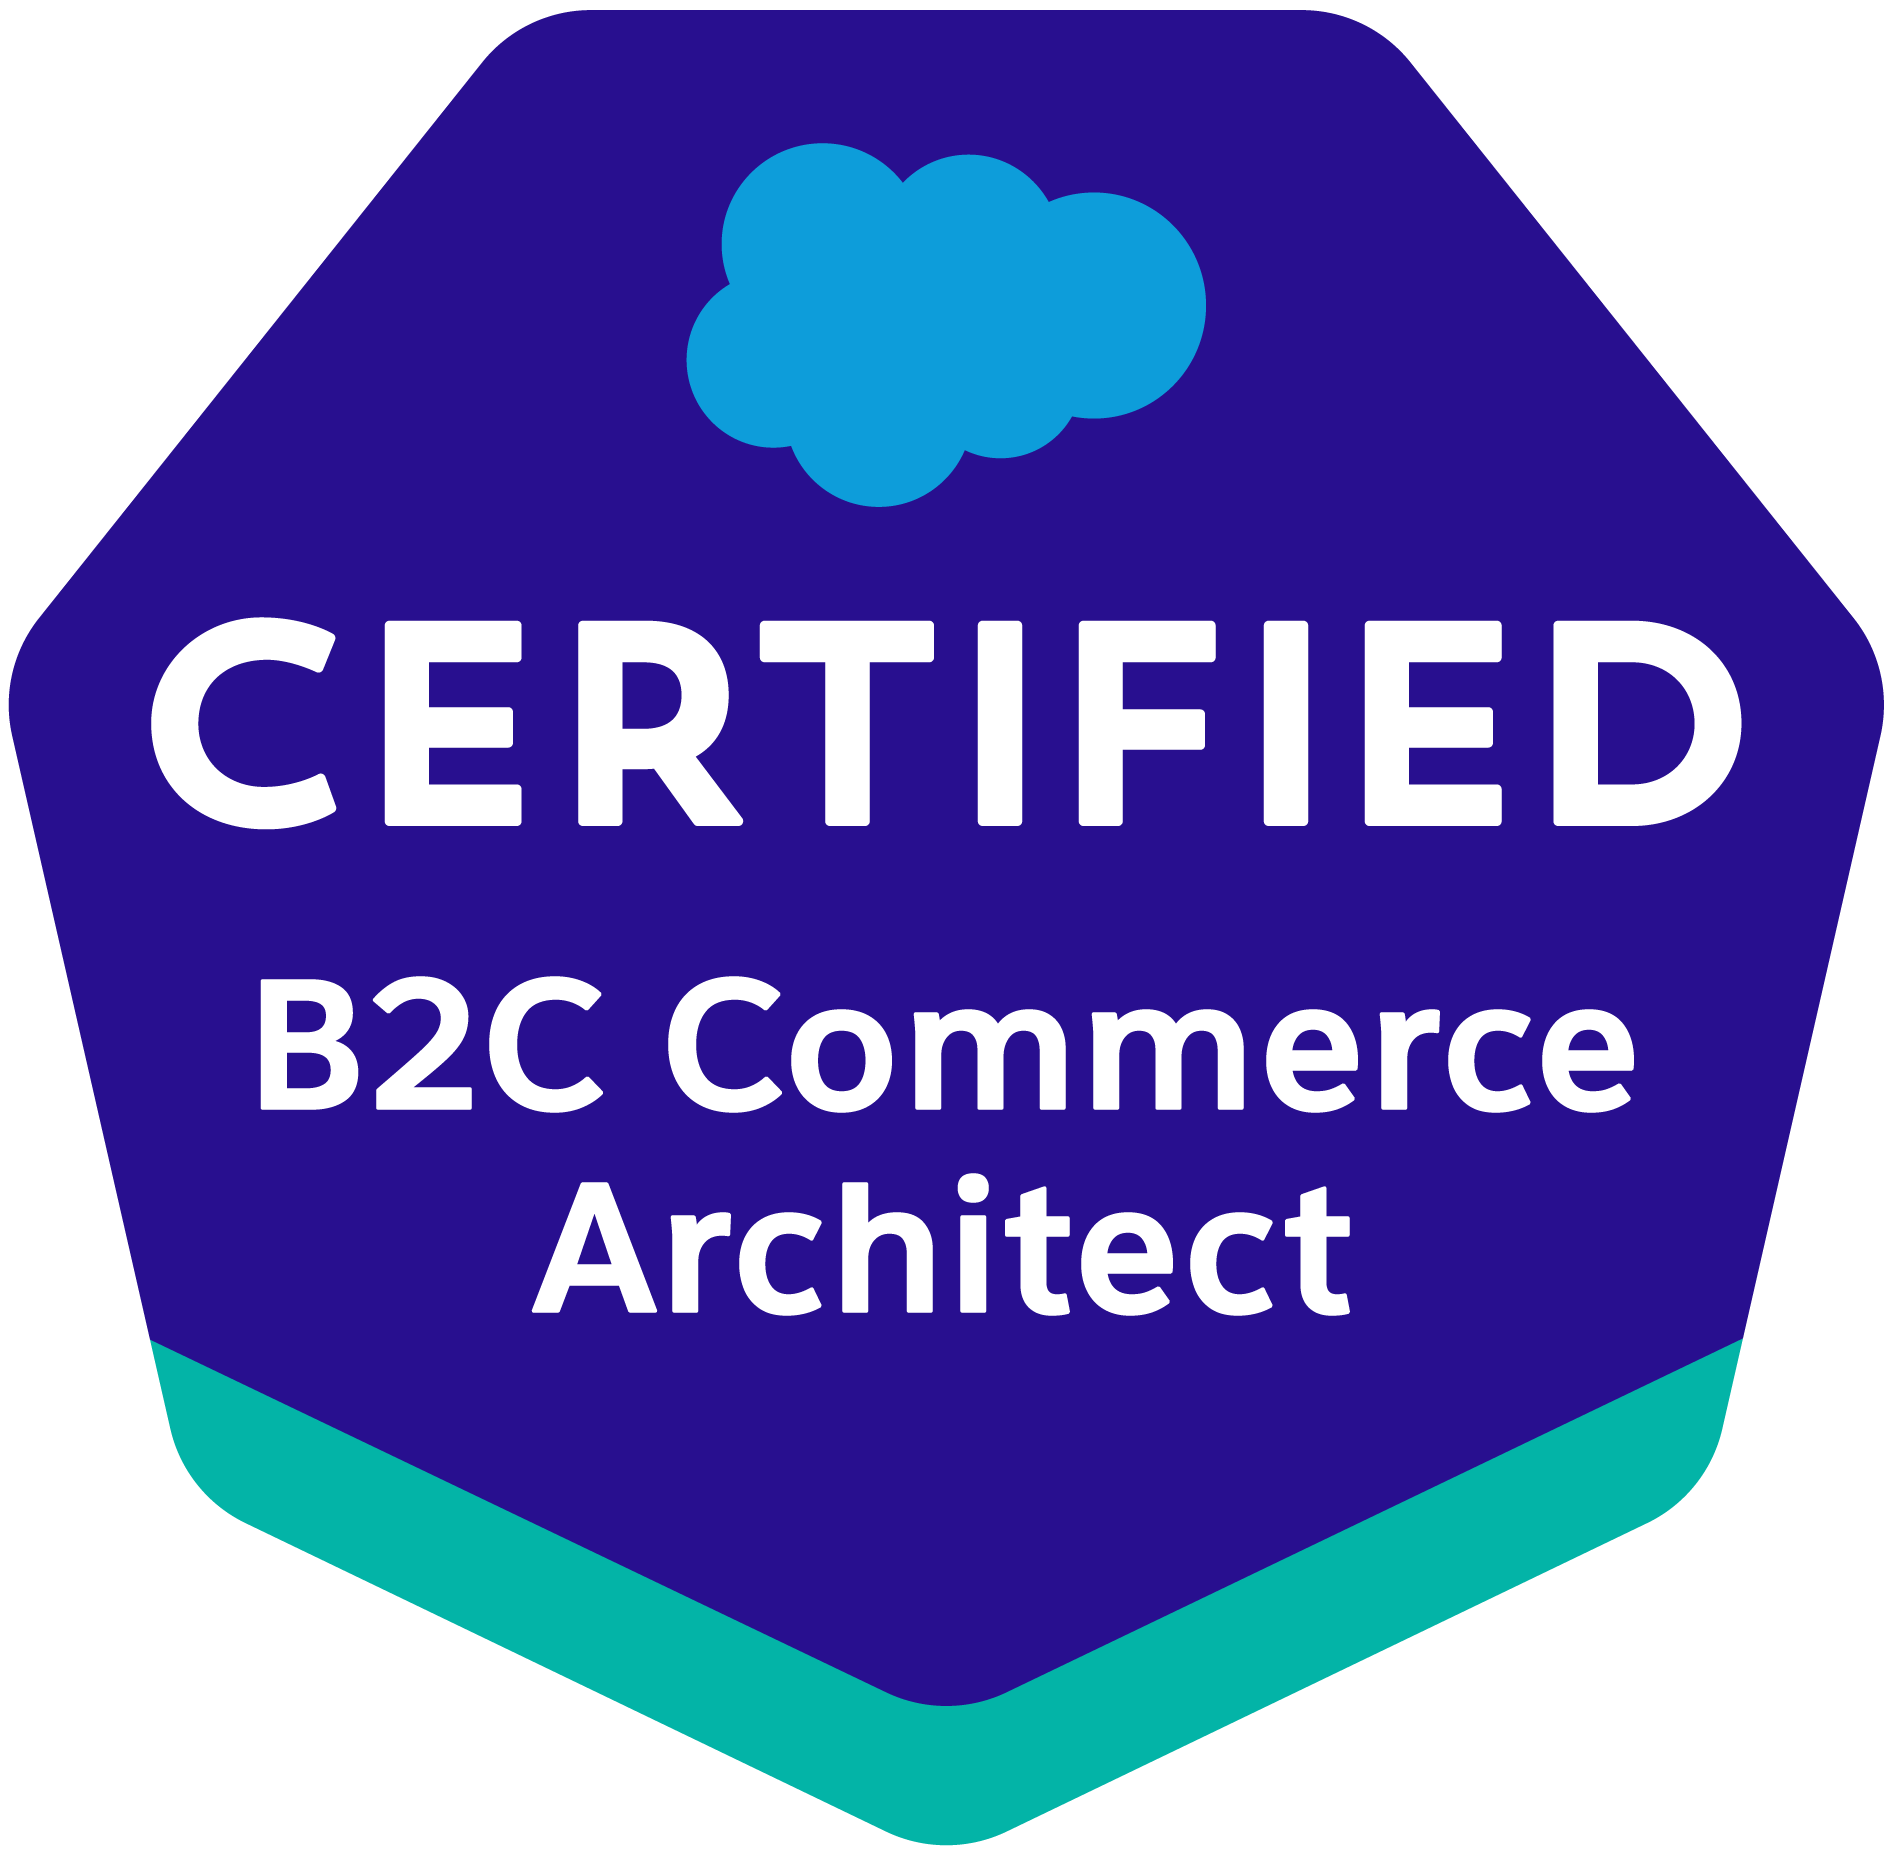 B2C Commerce Architect certification